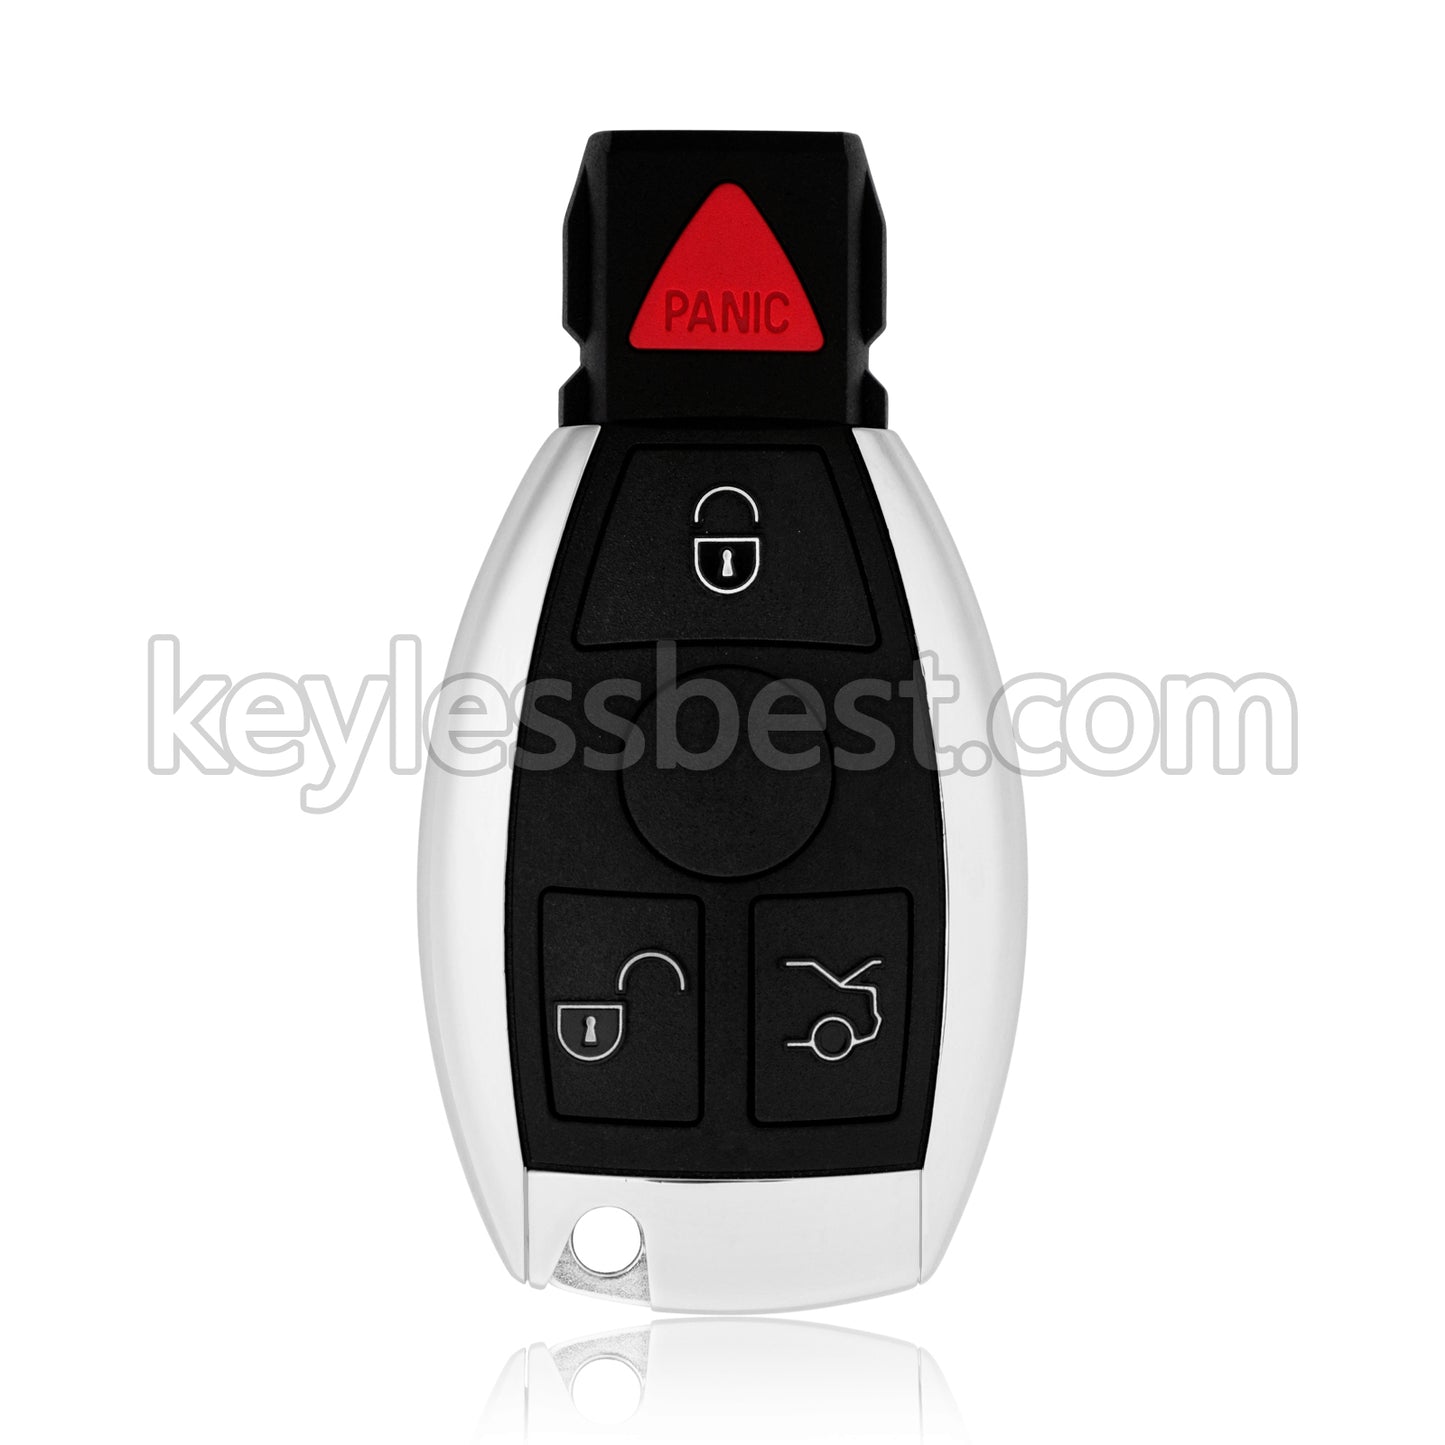 1997 - 2016 Mercedes-Benz ALL / 4 Buttons Remote Key / IYZ3312 IYZ3317 / 315MHz